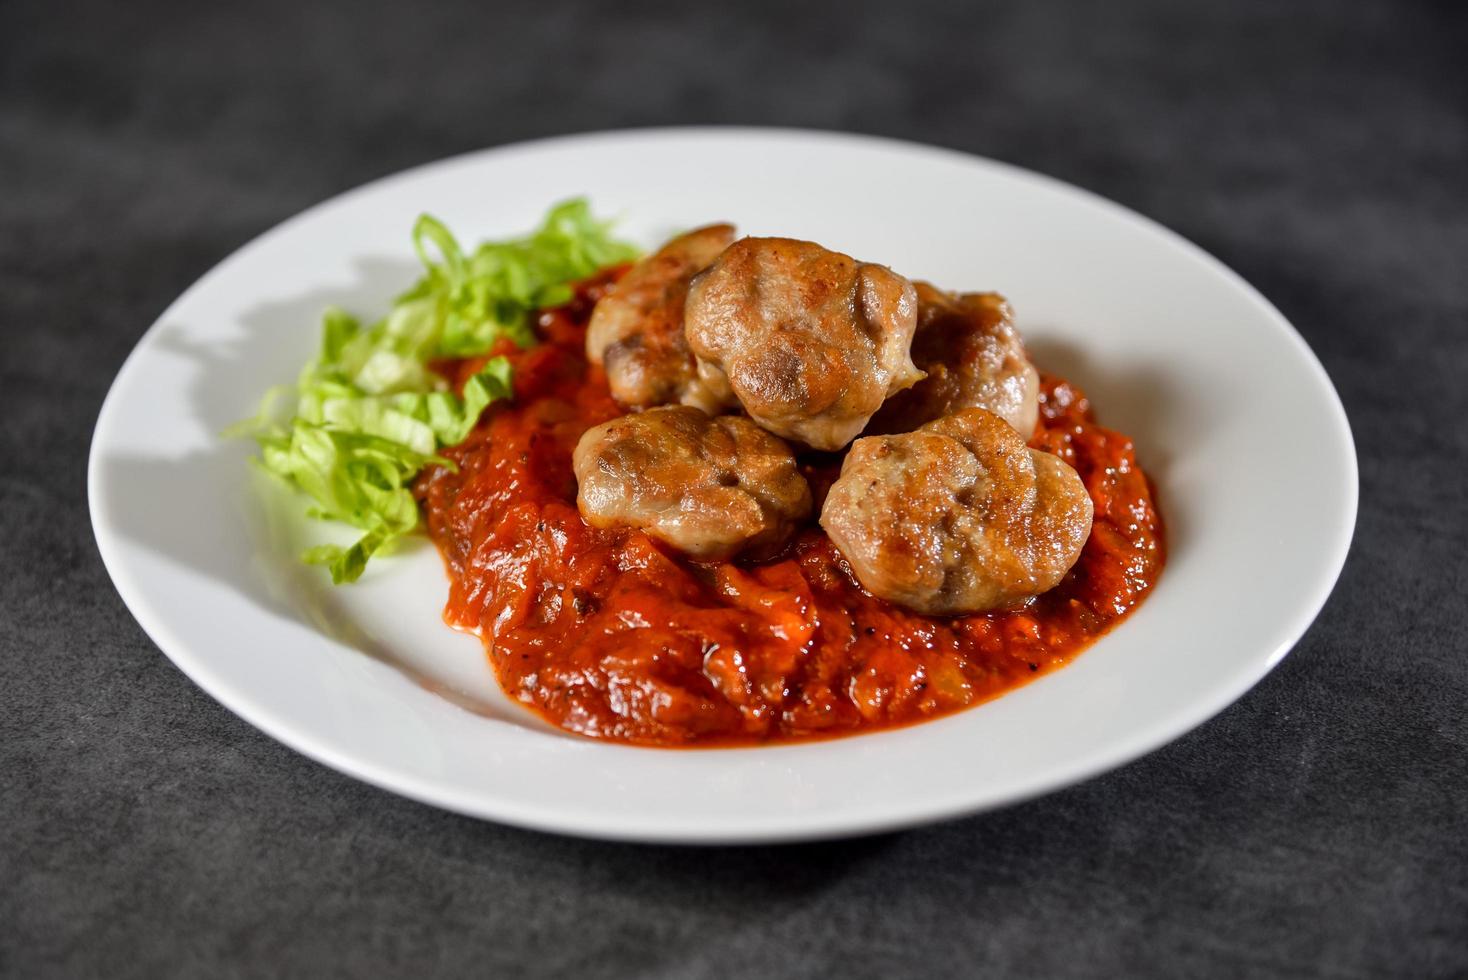 Homemade chicken meatballs in tomato sauce photo